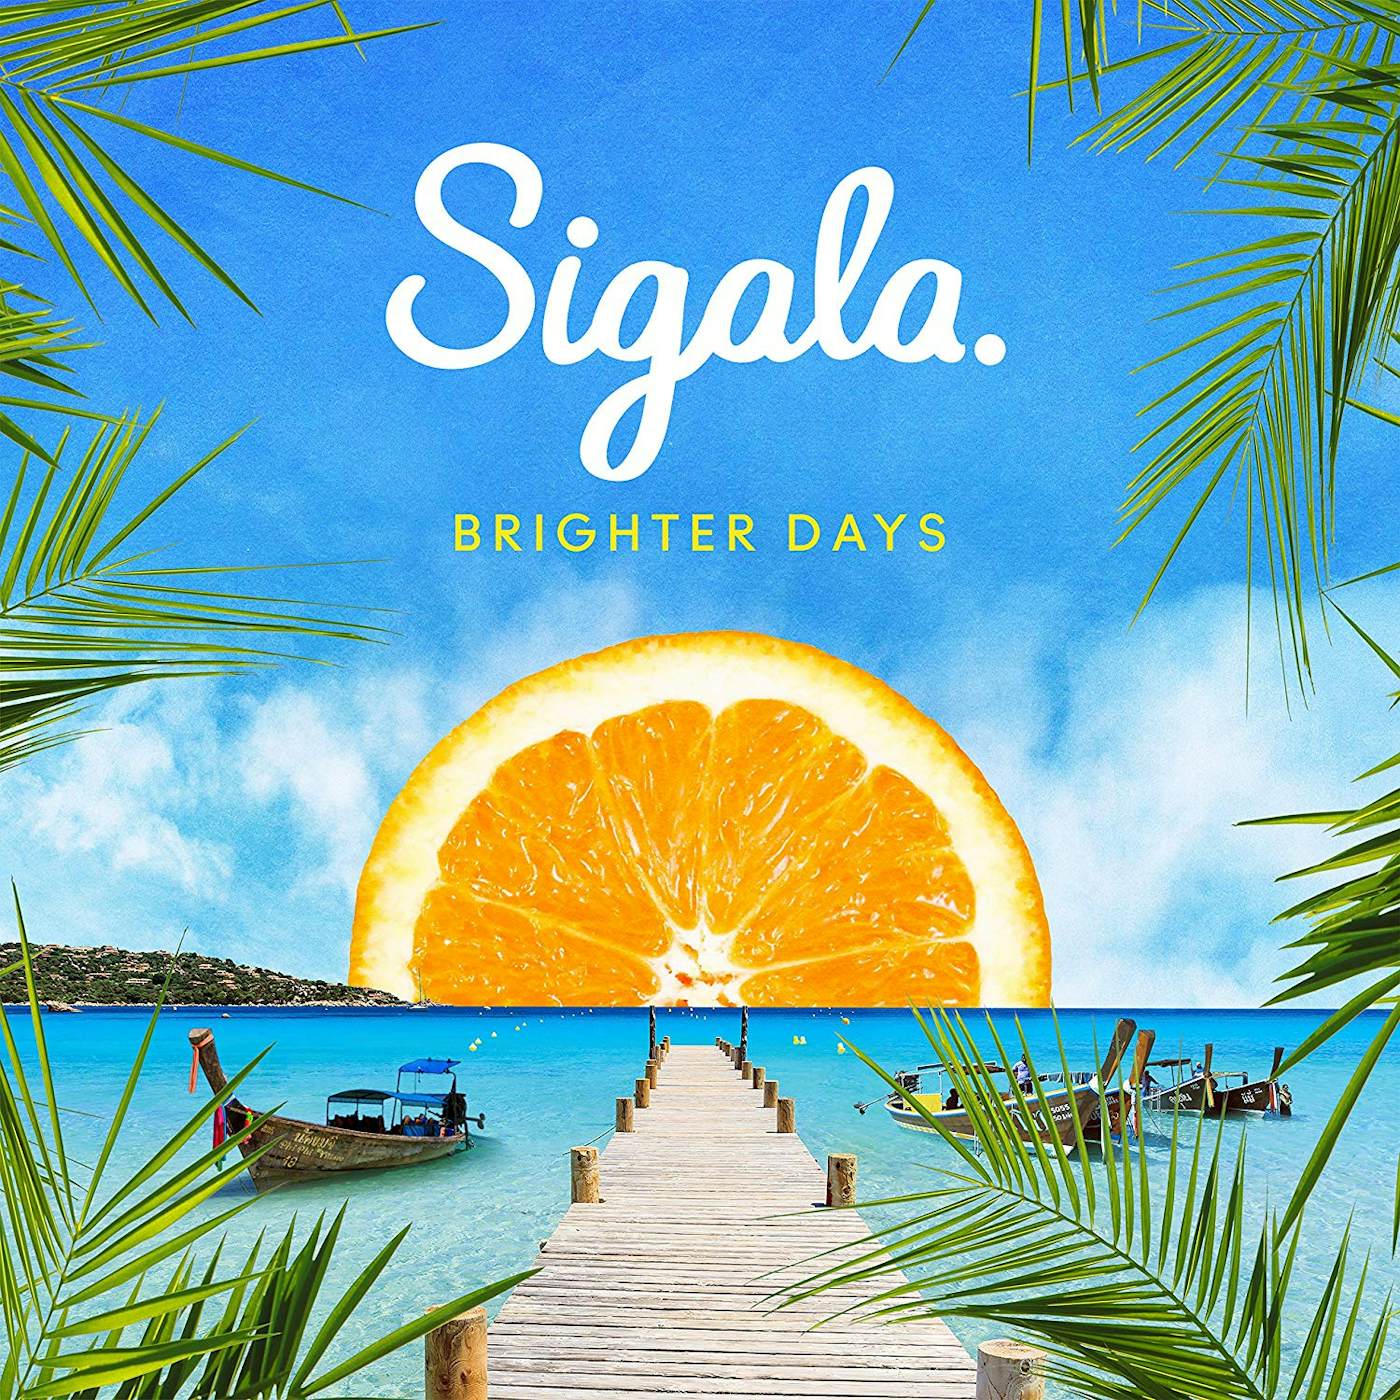 Sigala BRIGHTER DAYS CD